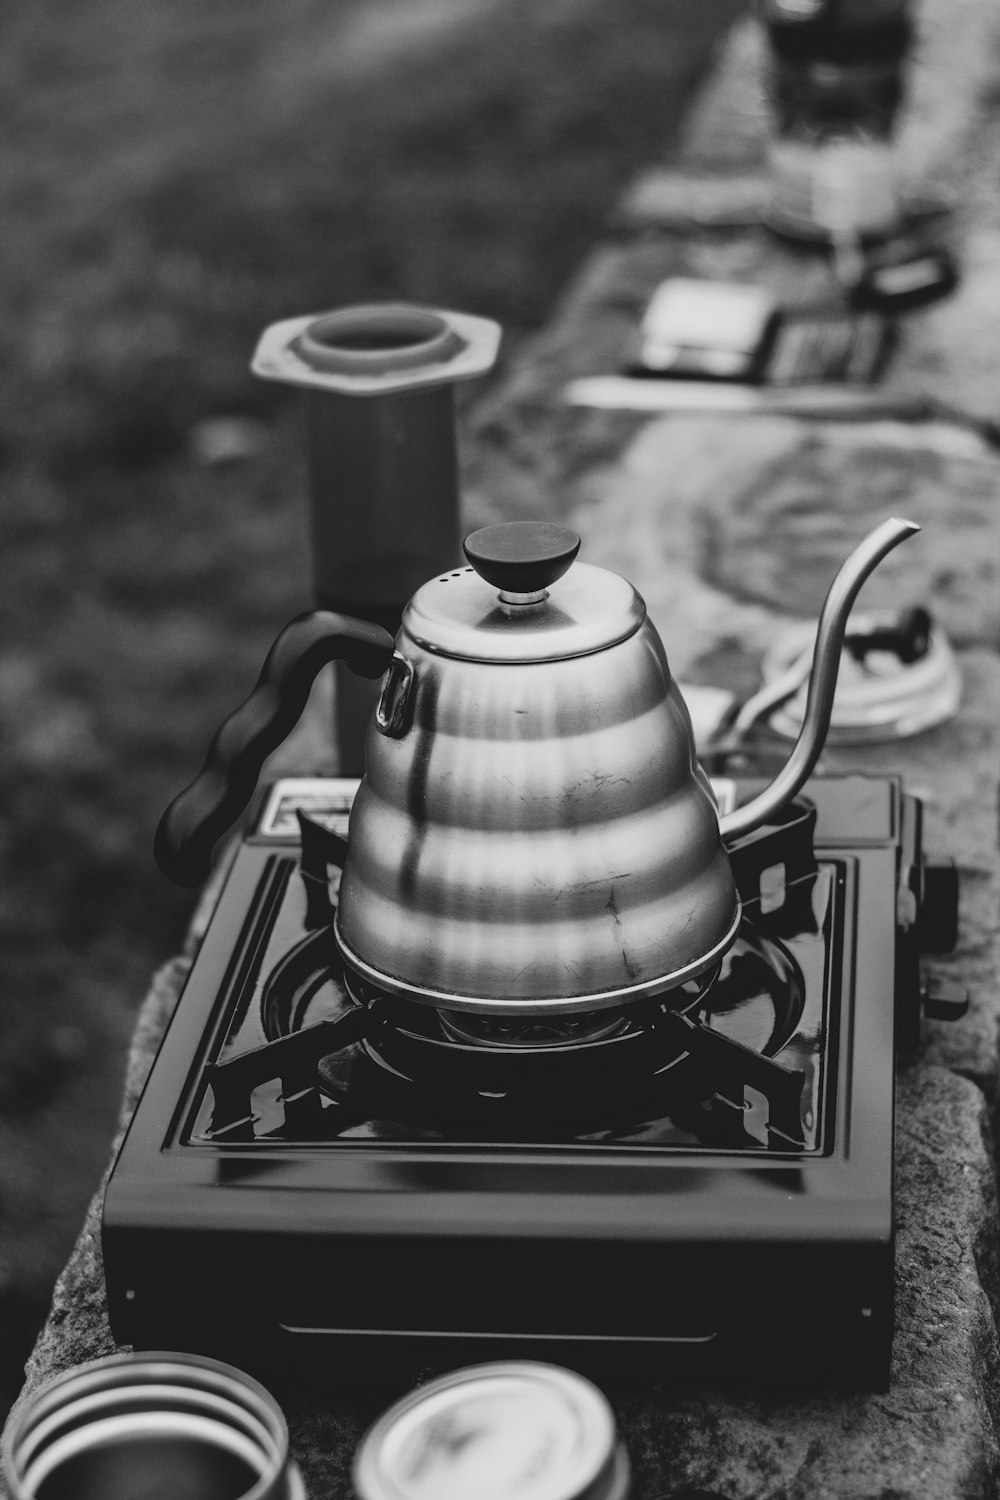 gray stainless steel teapot